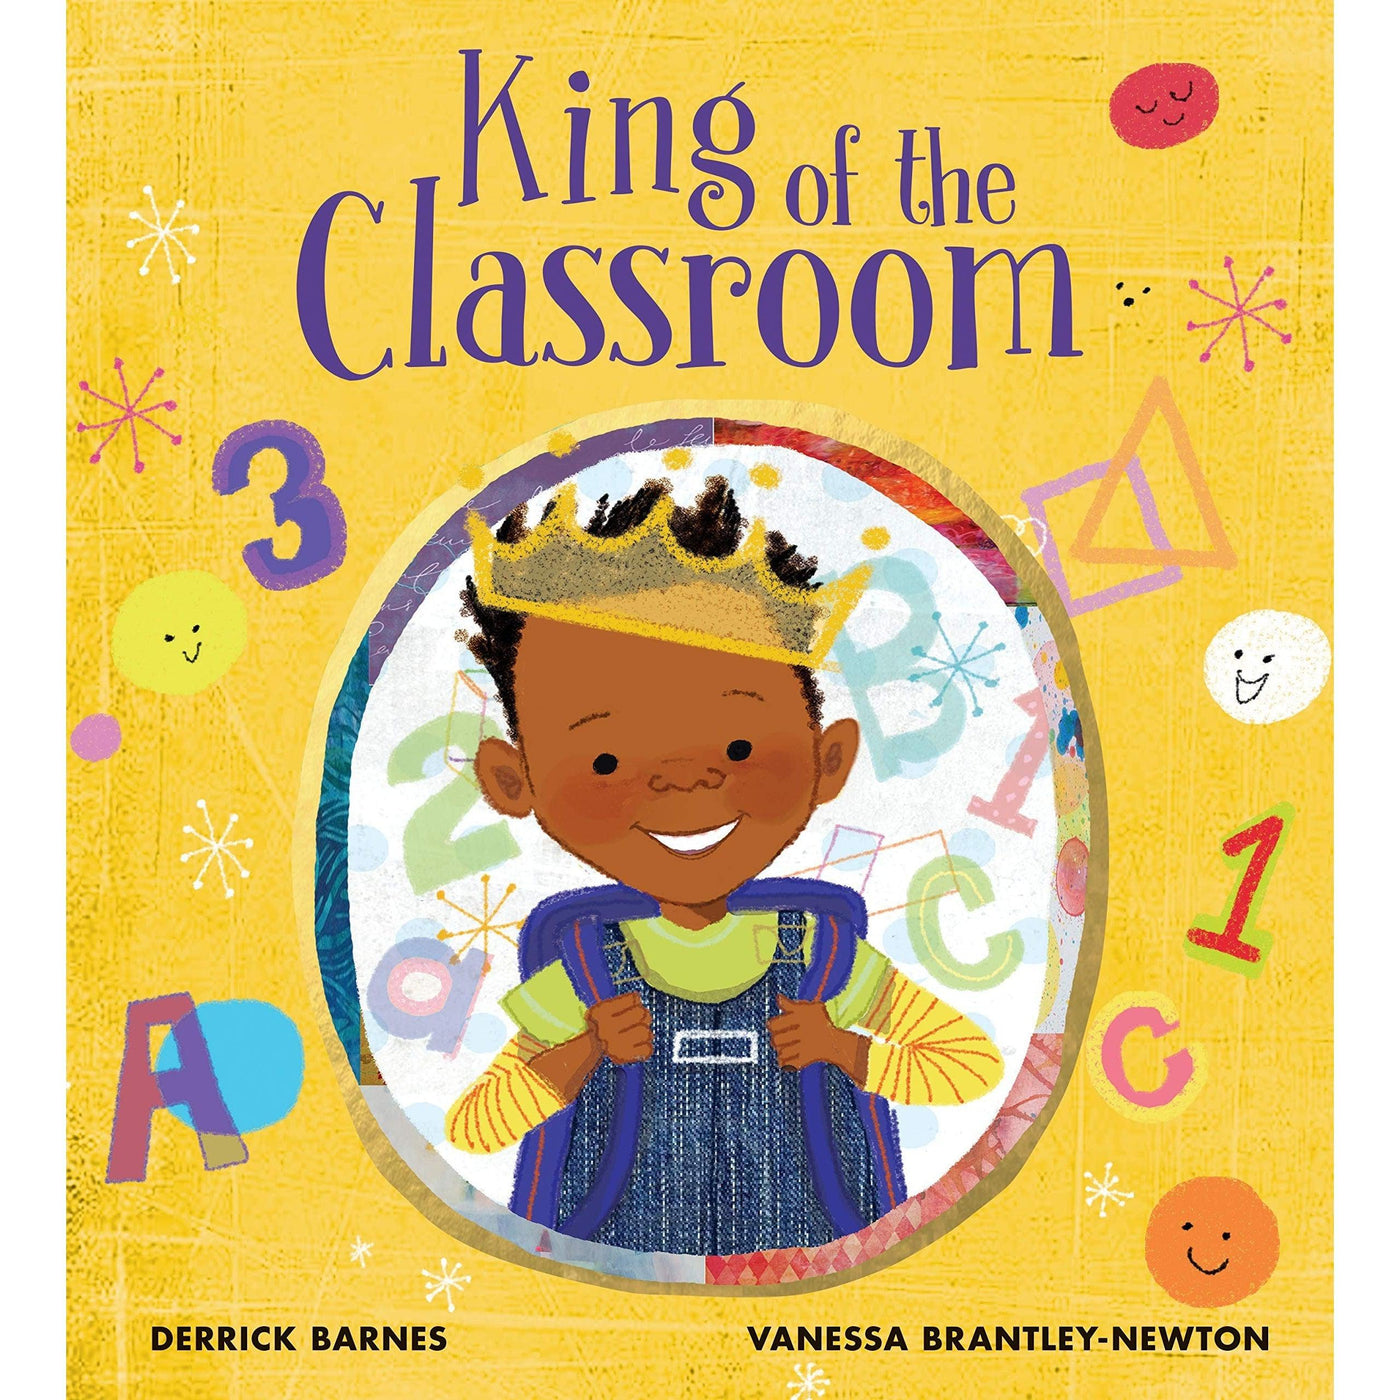 King Of The Classroom - Derrick Barnes & Vanessa Brantley-Newton